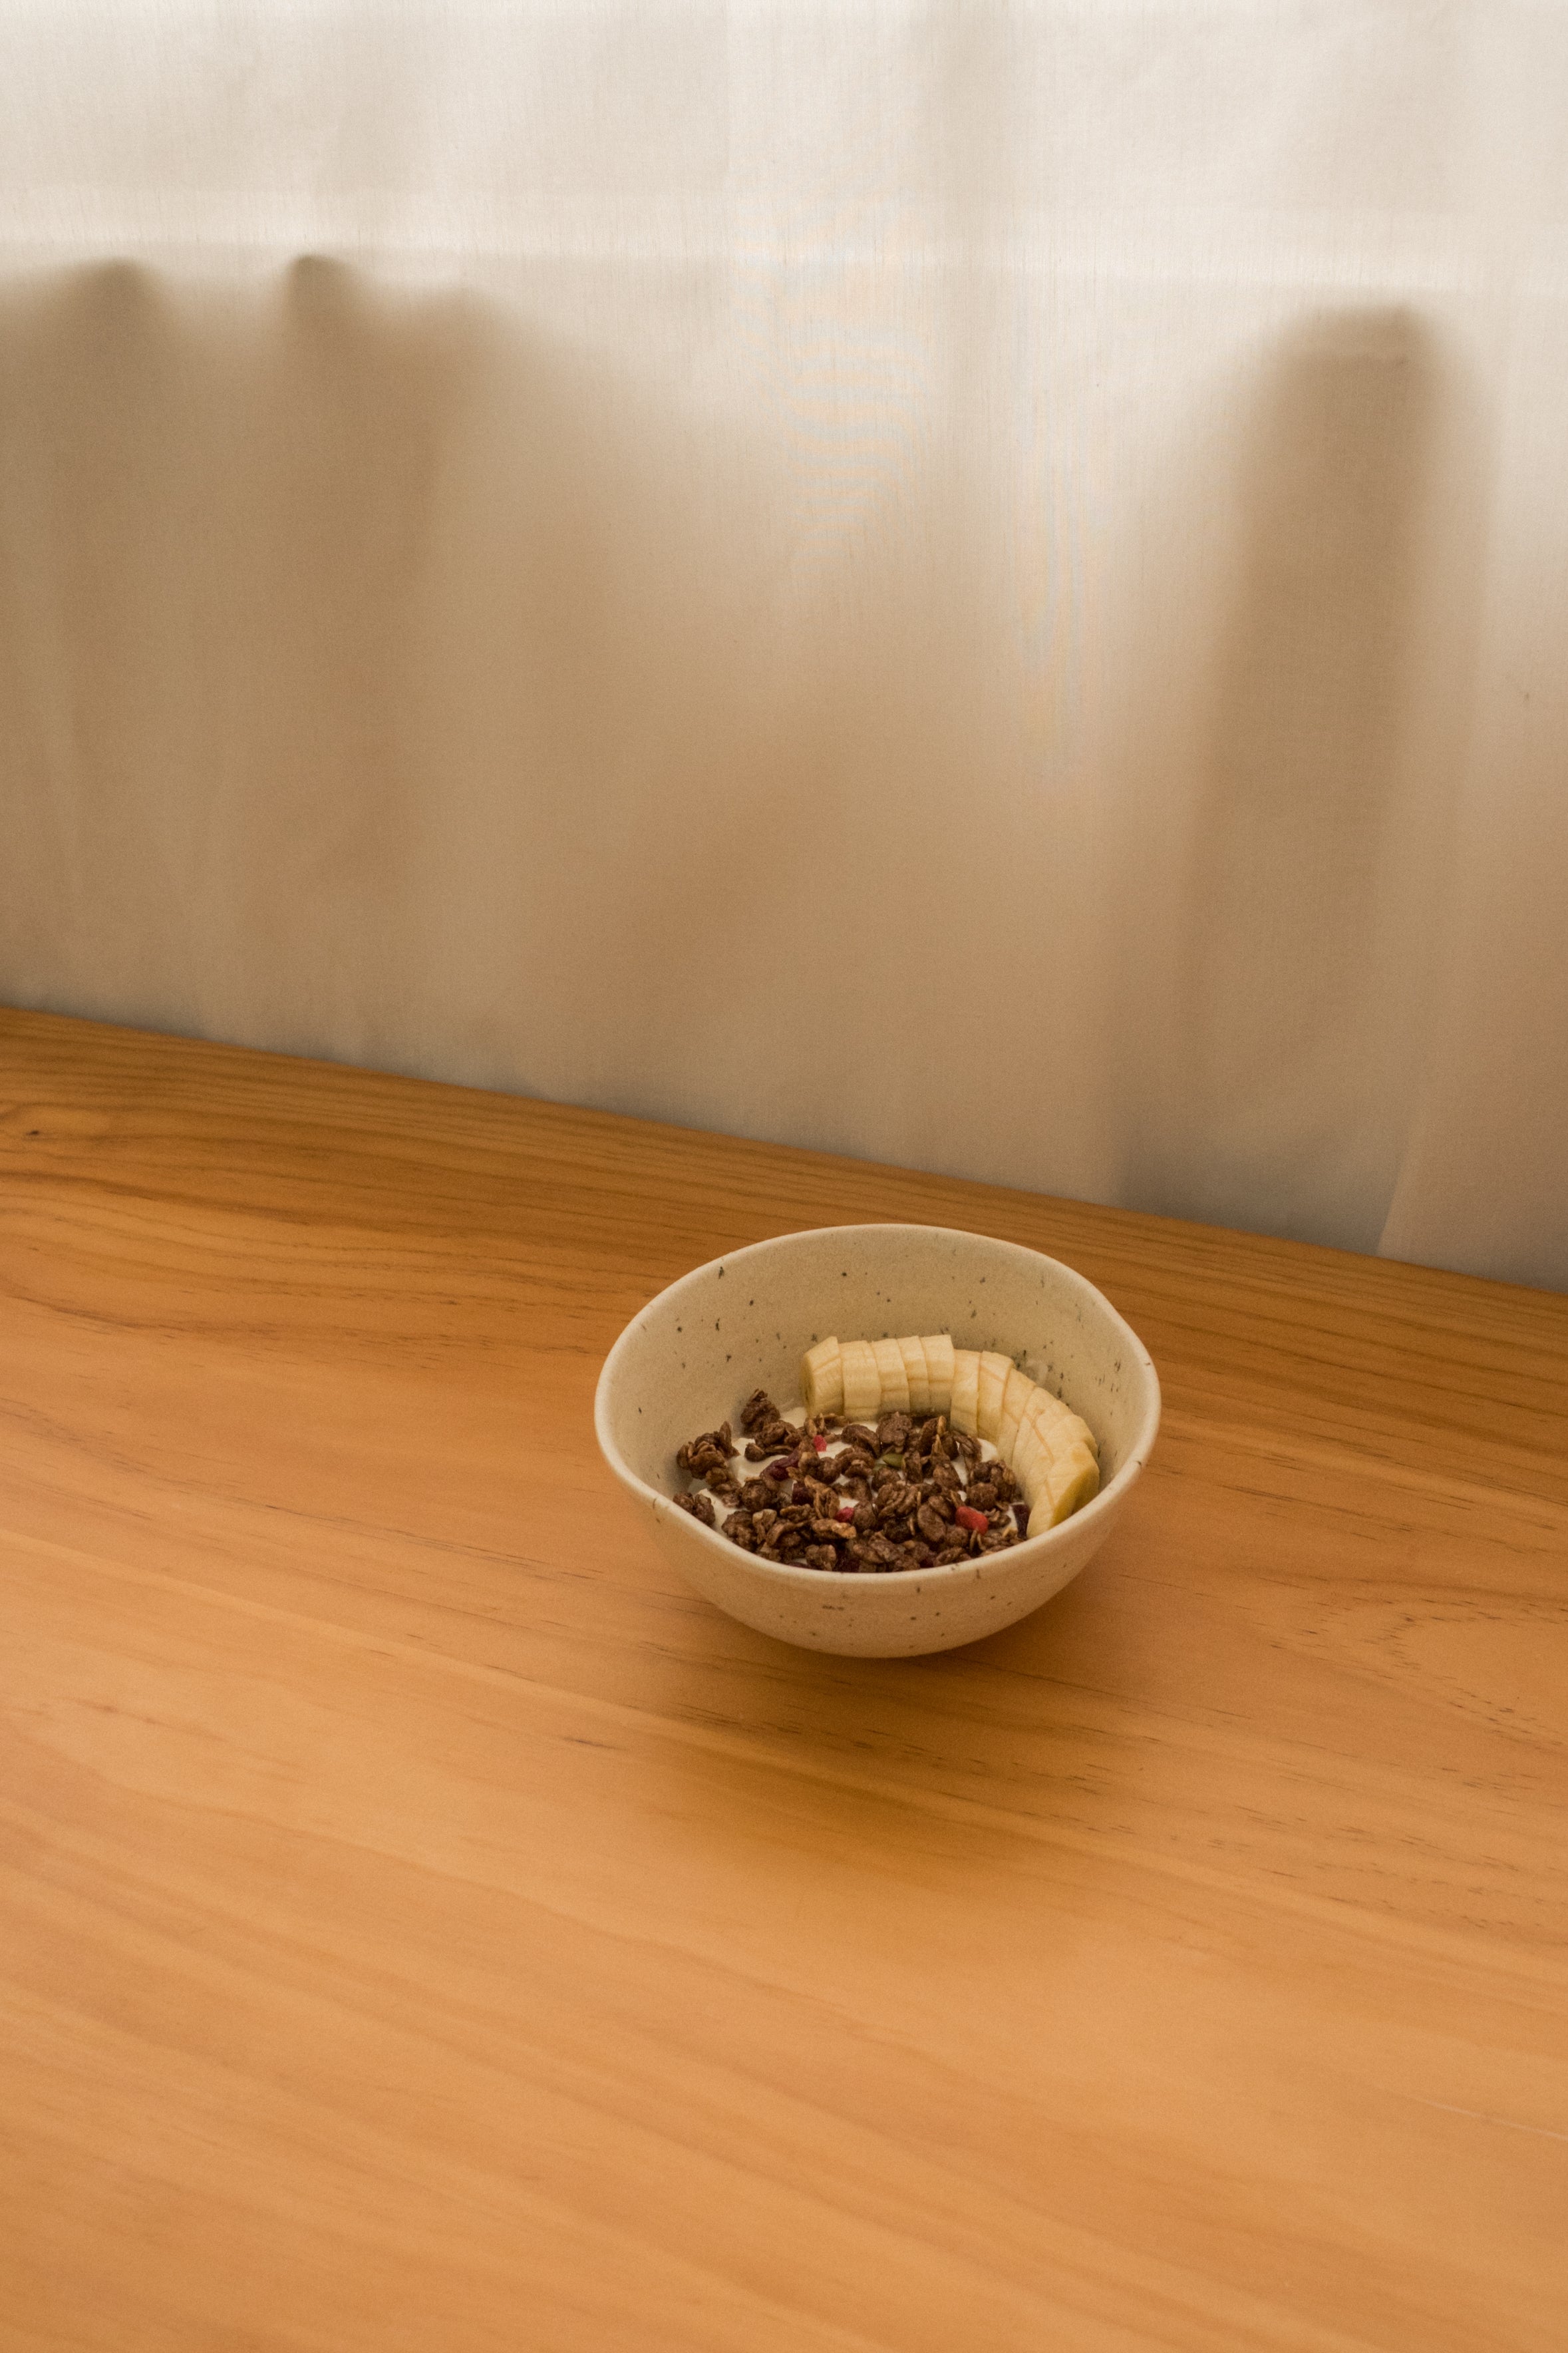 Bowl with Organic Rim in Sandstone